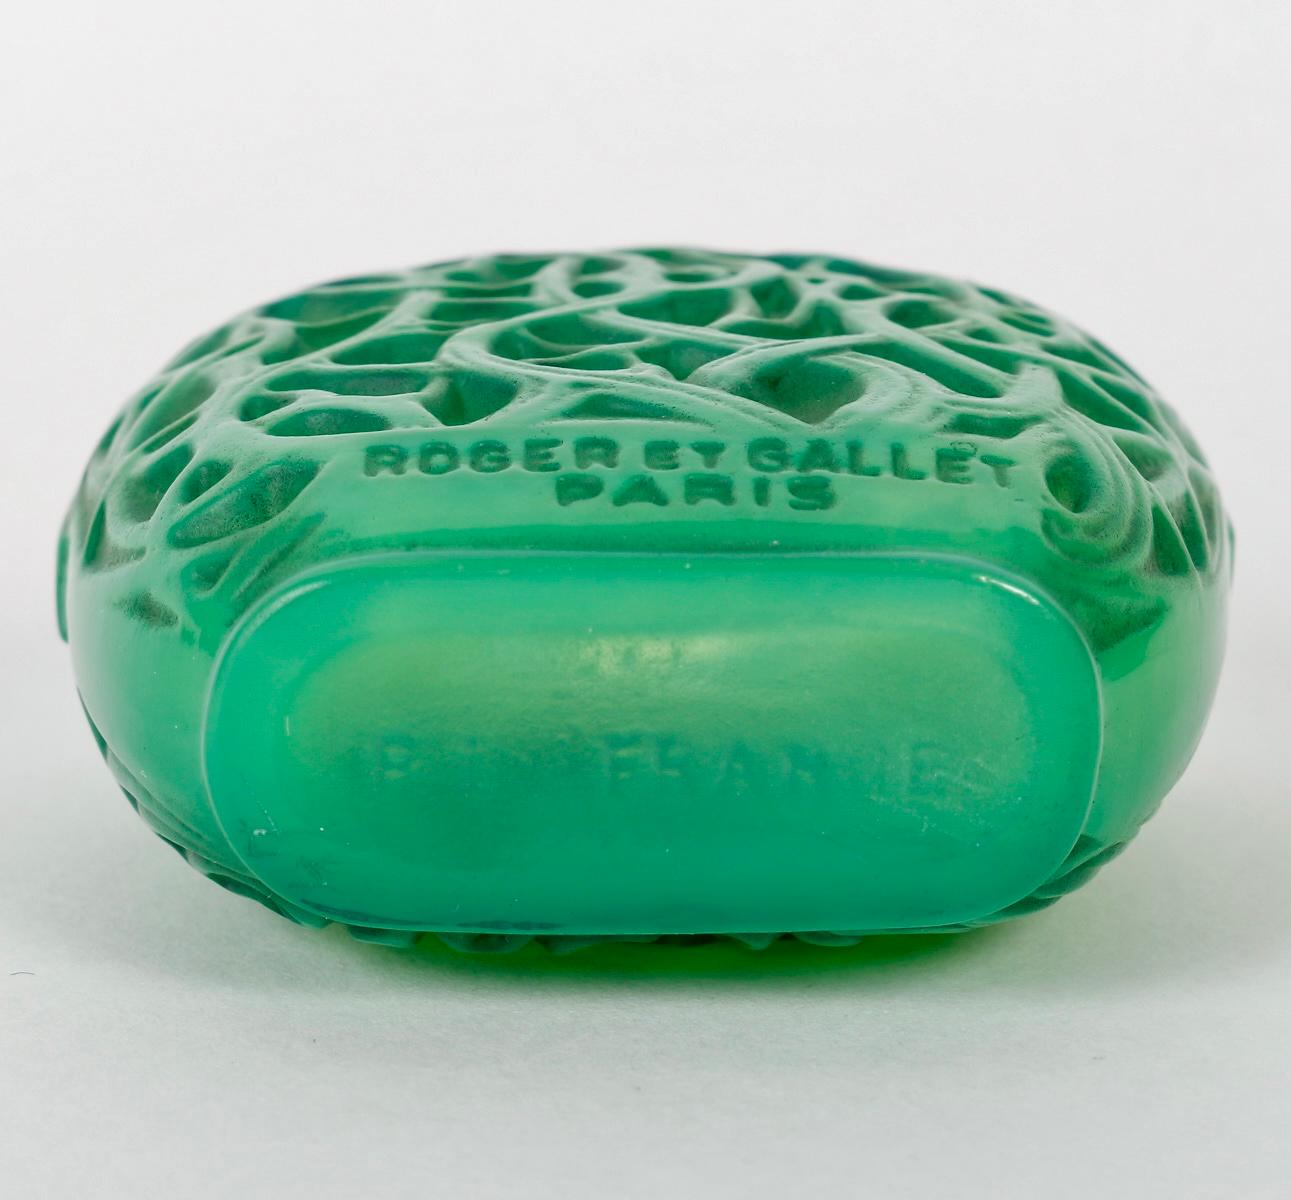 Art Deco 1926 René Lalique Perfume Bottle Le Jade for Roger & Gallet Jade Green Glass For Sale